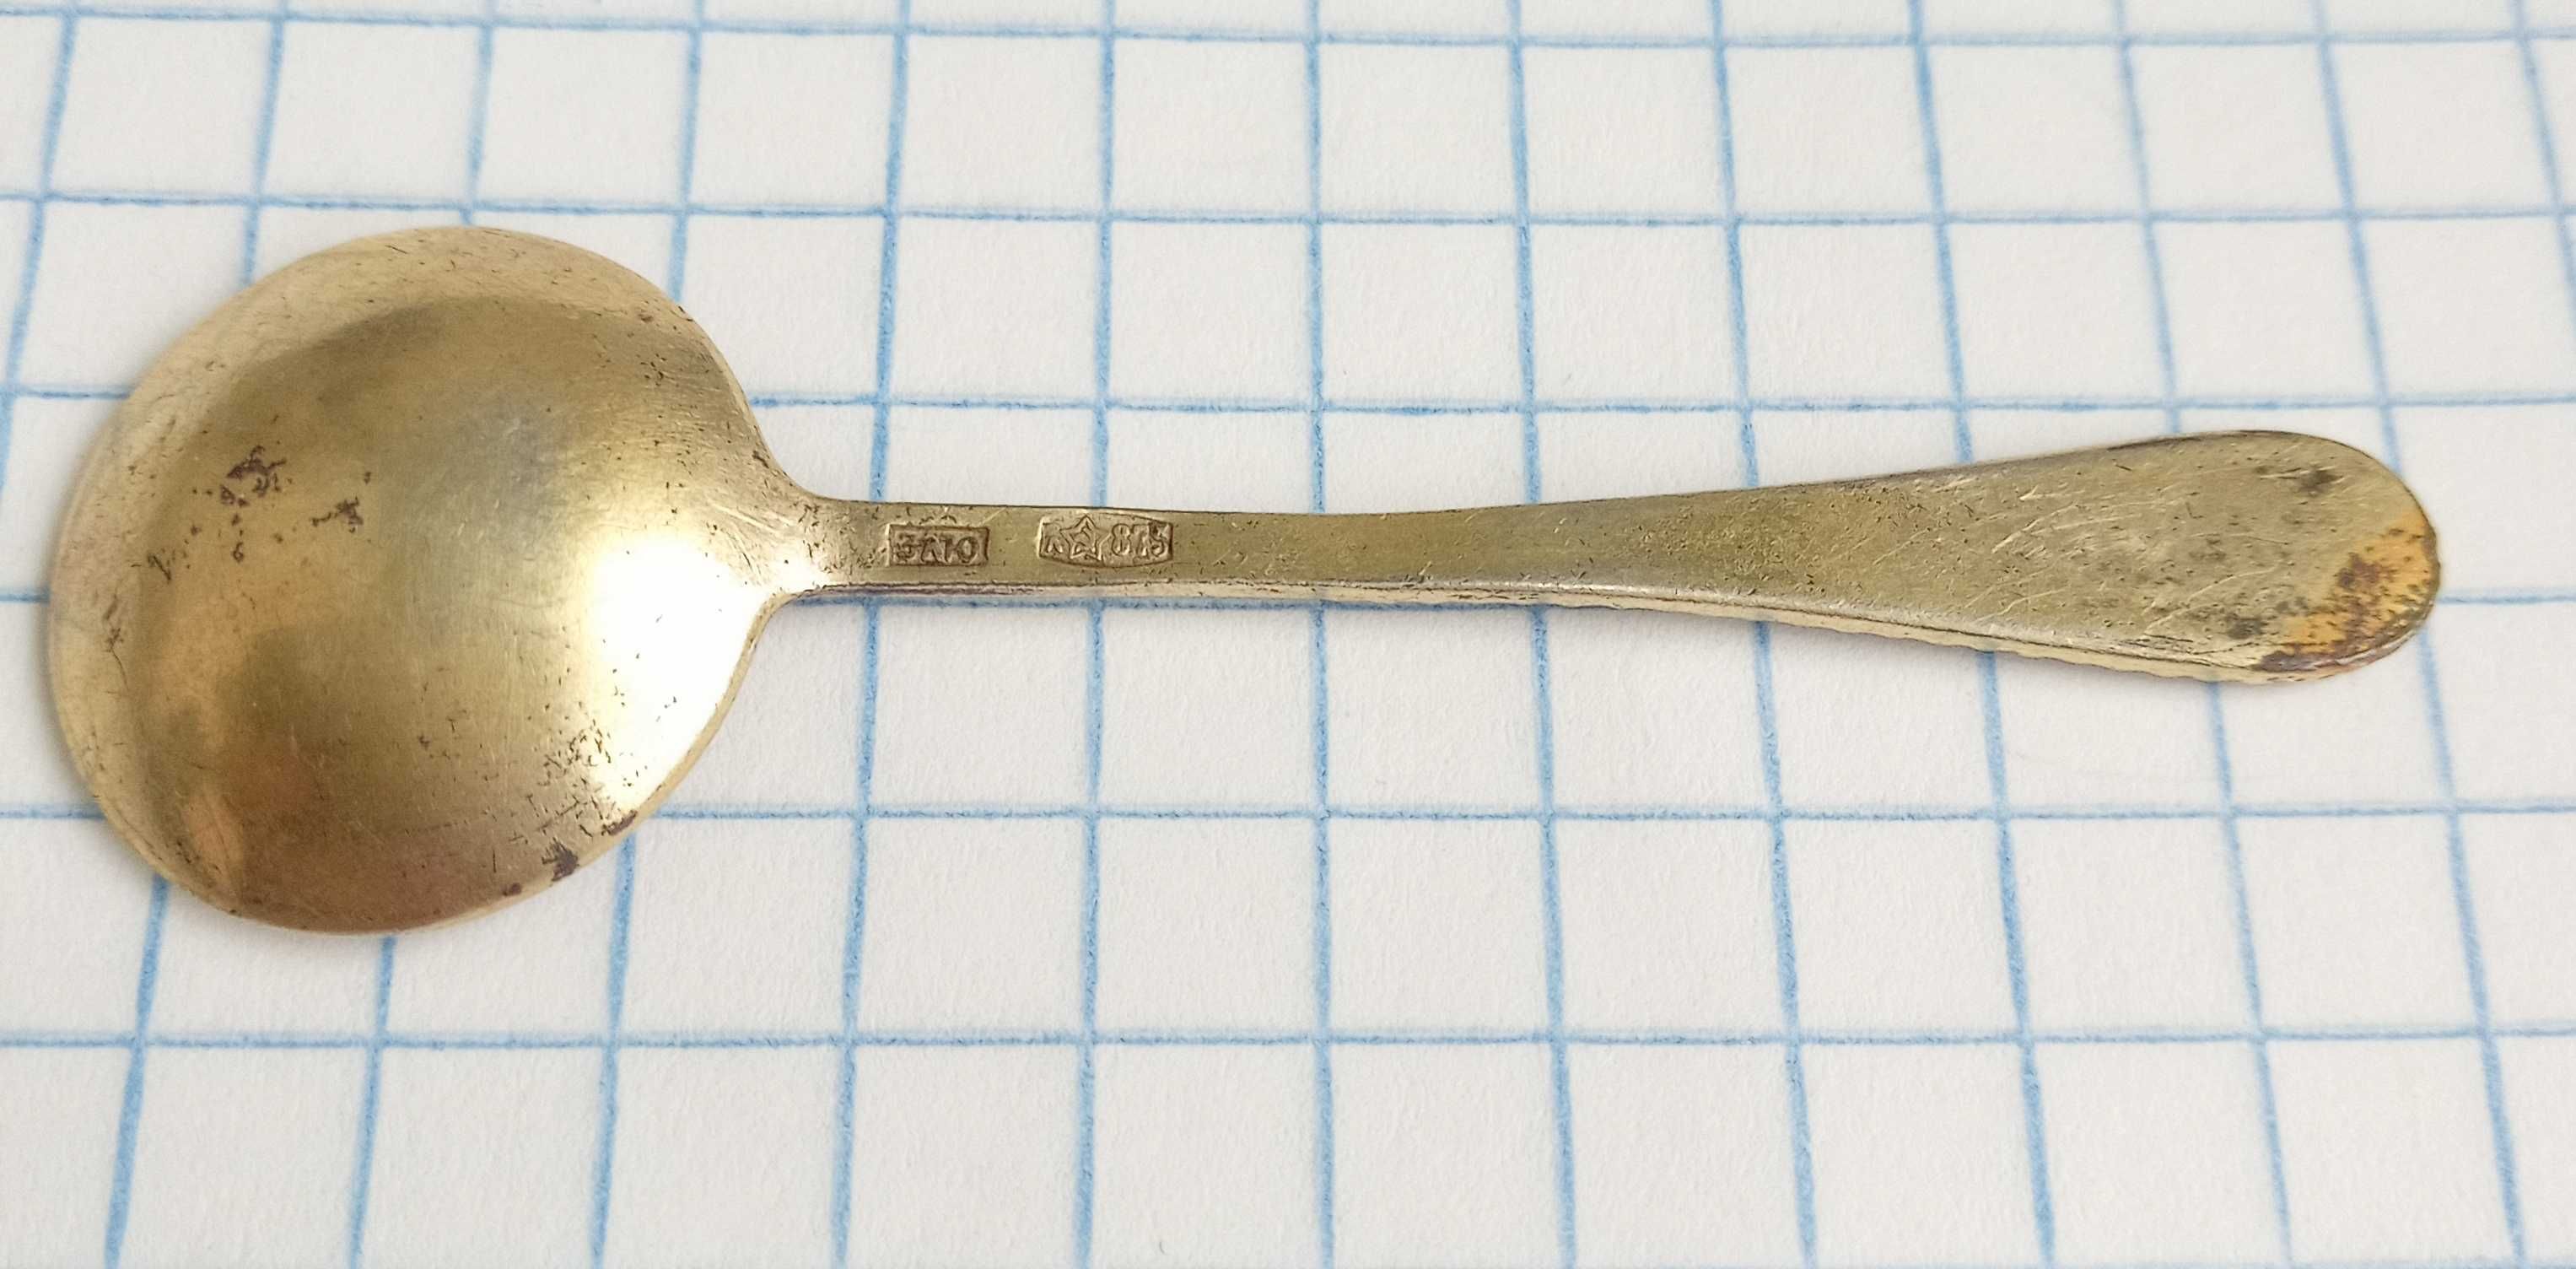 Маленька ложечка ложка для спецій, срібло 875 проба, з емалями СССР